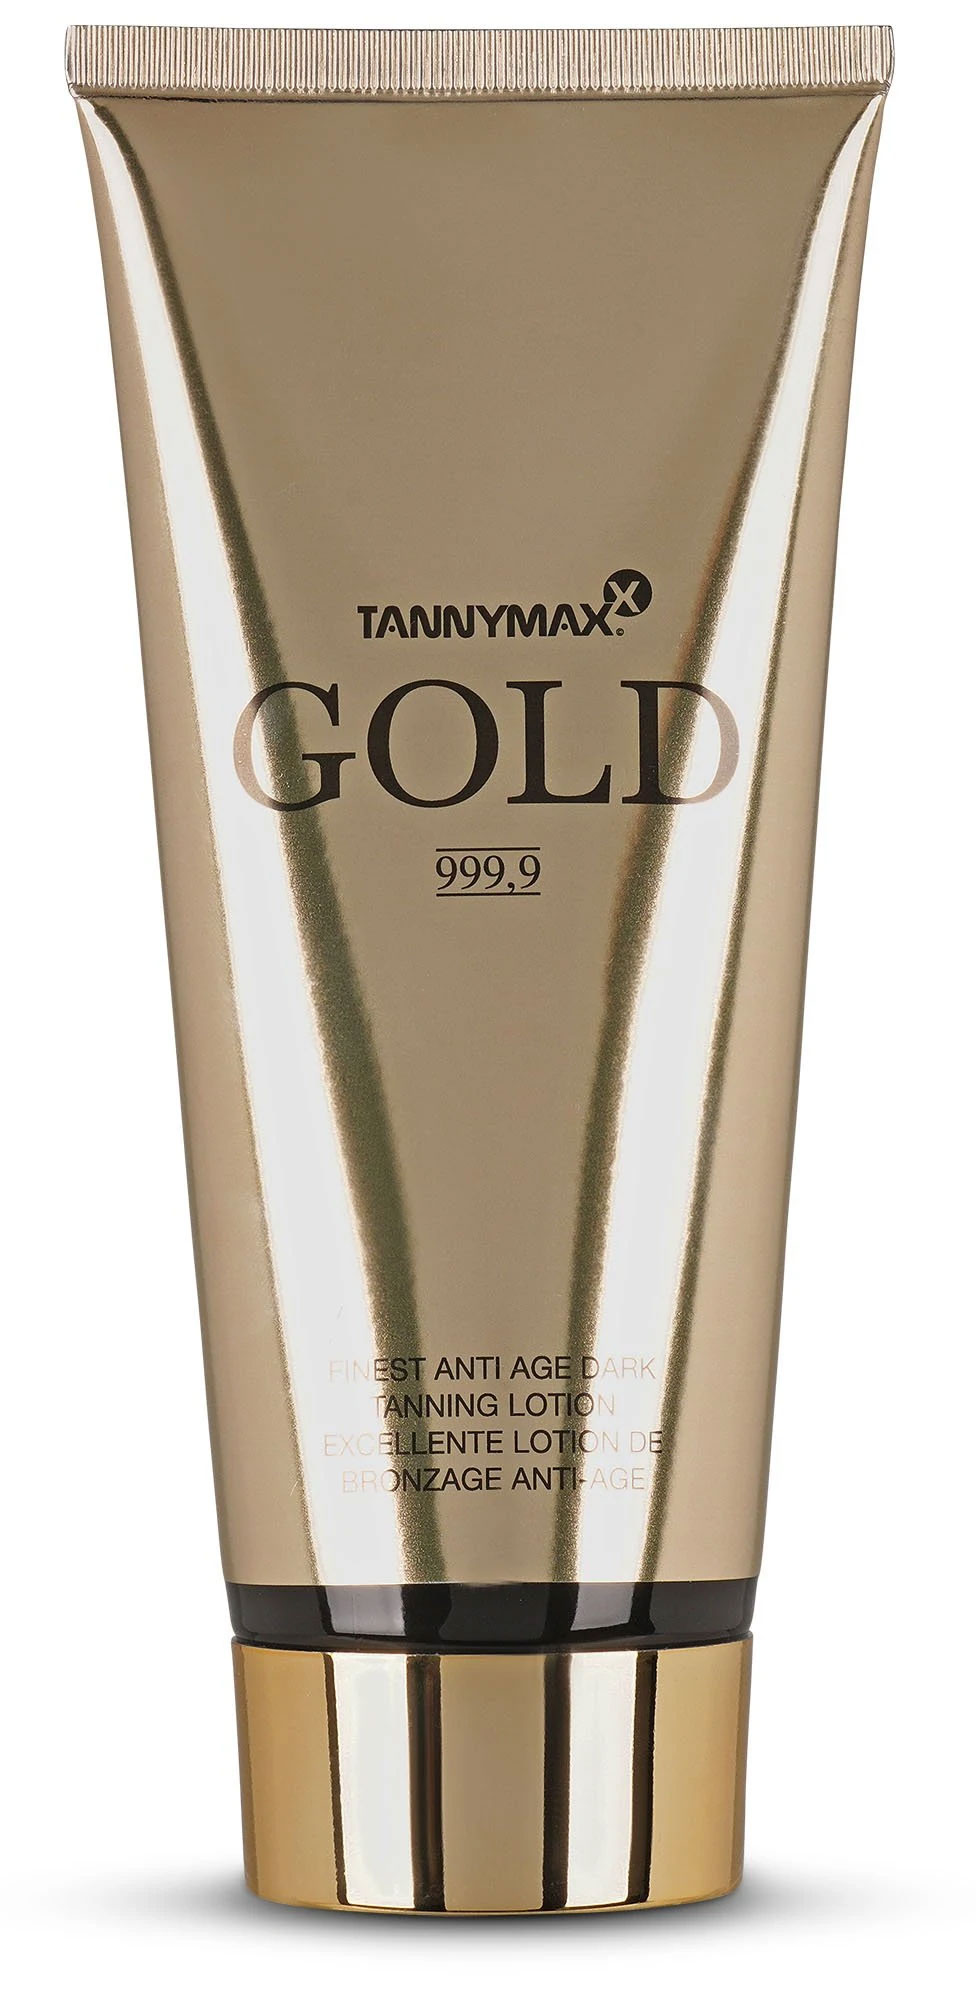 Tannymaxx Gold 999,9 Finest Anti Age Dark Tanning Lotion 0521010000 width=